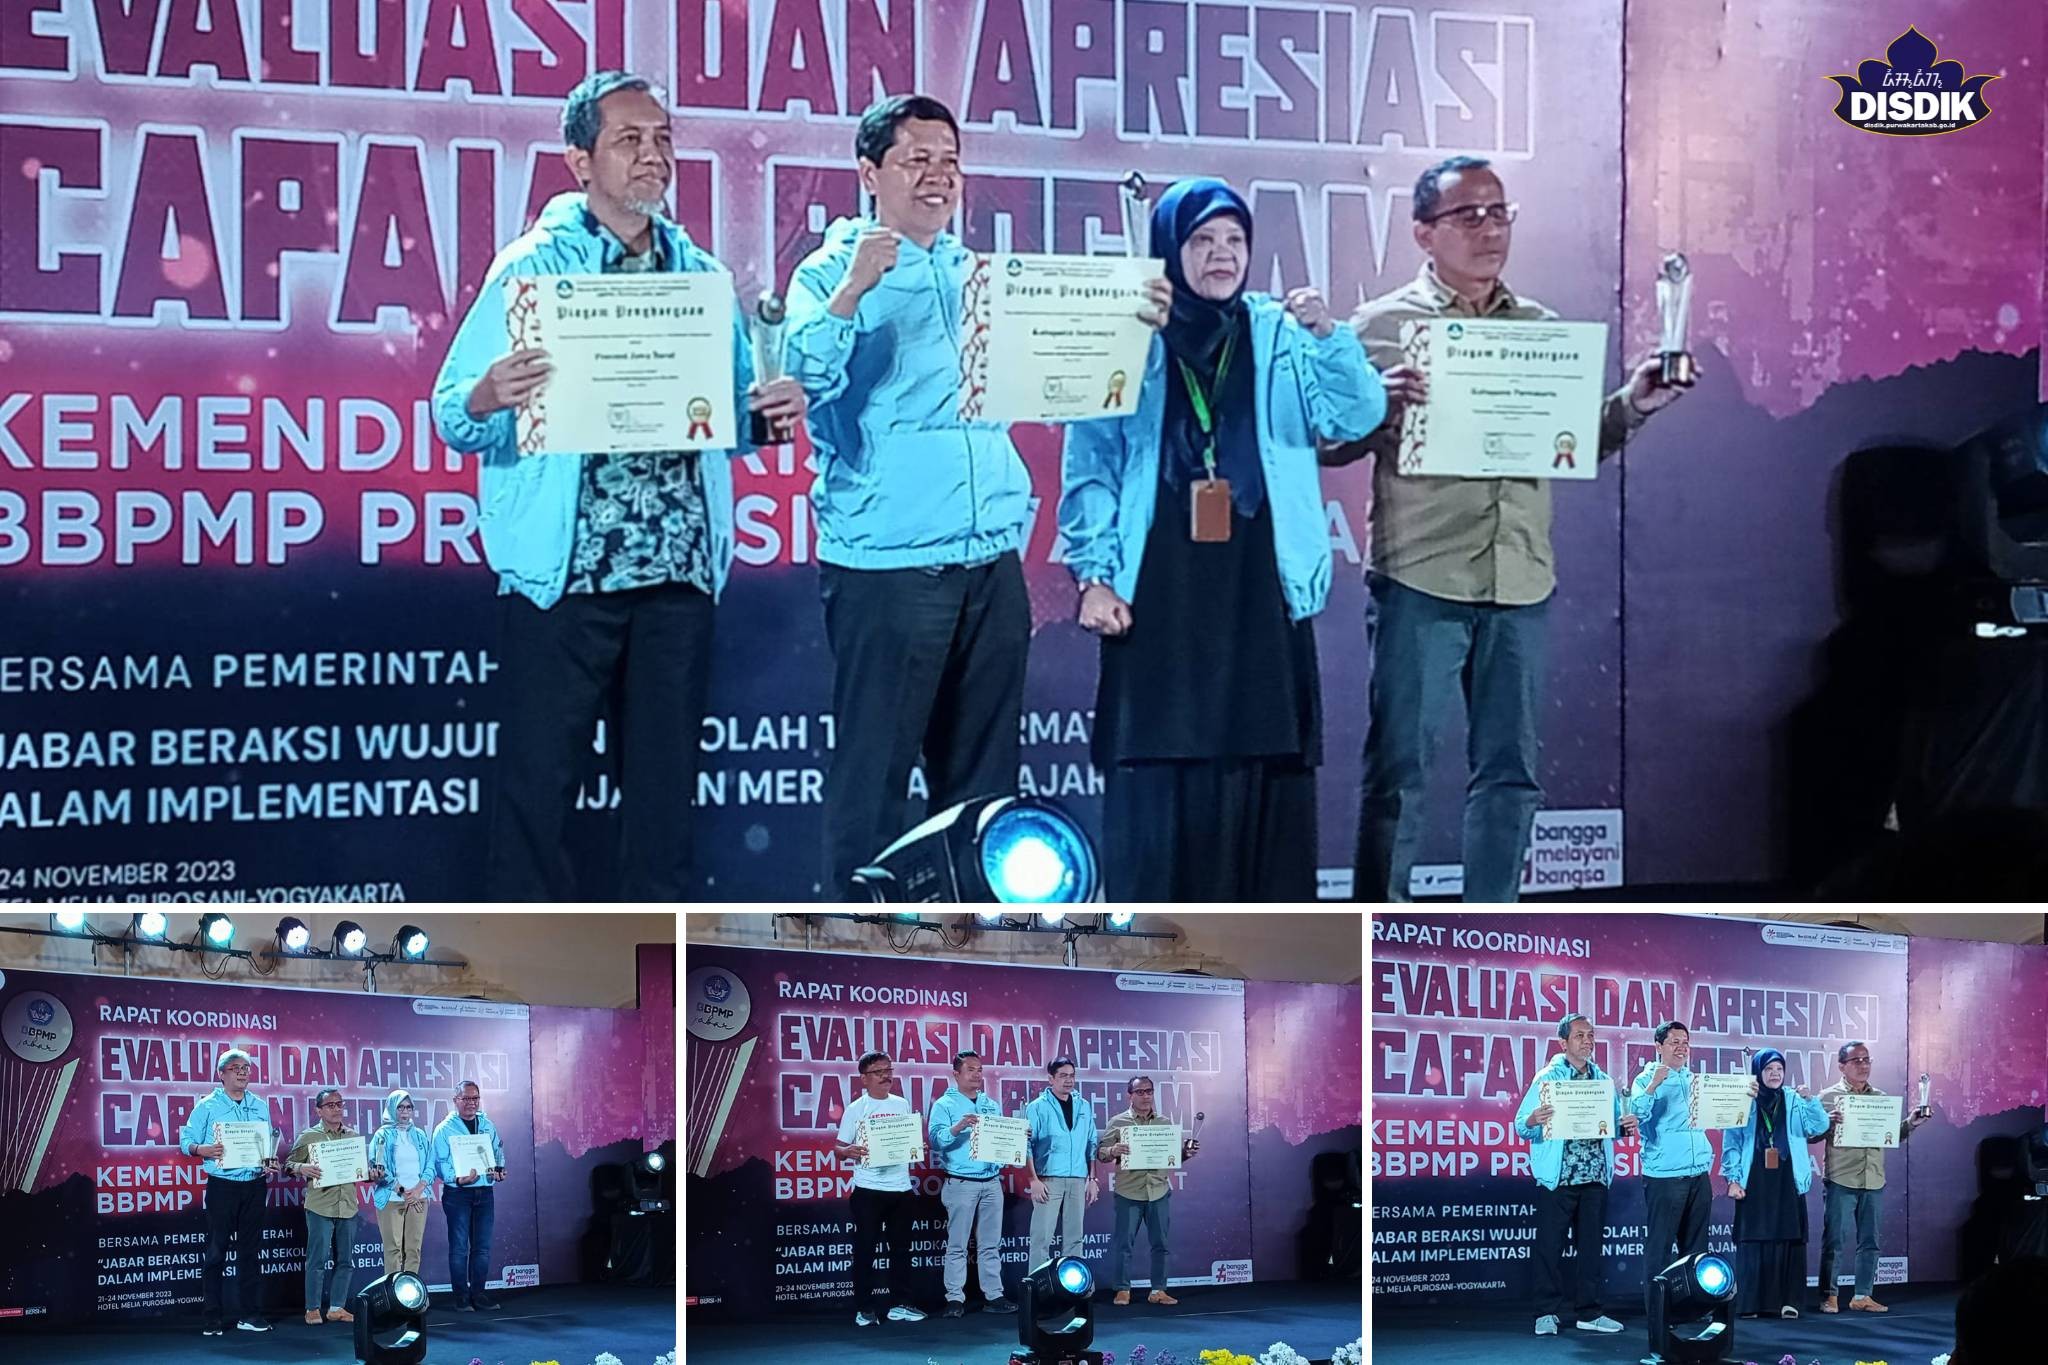 Disdik Purwakarta Borong Penghargaan Apresiasi Capaian Program Kemendikbudristek BBPMP Jawa Barat